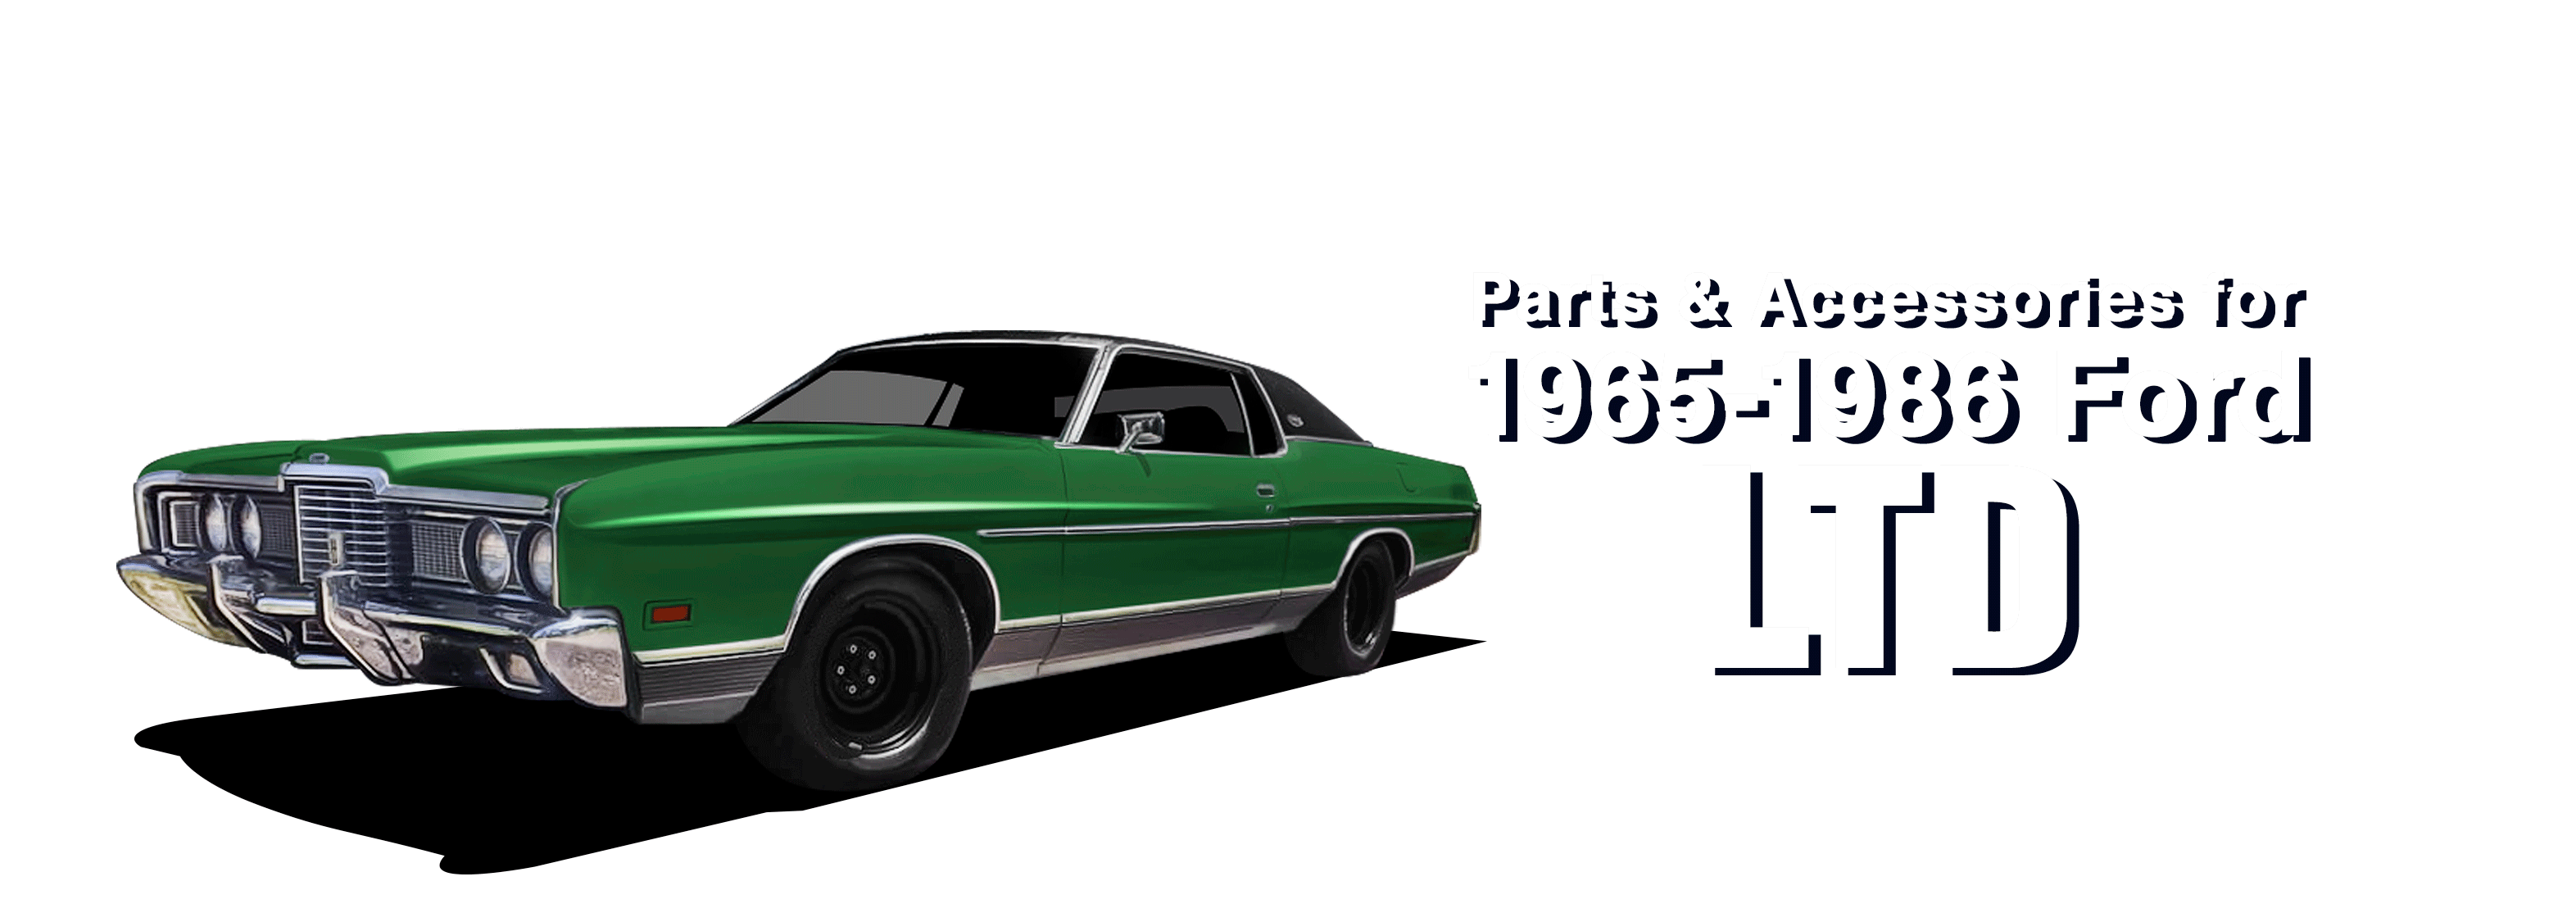 1965-1986 Ford LTD desktop